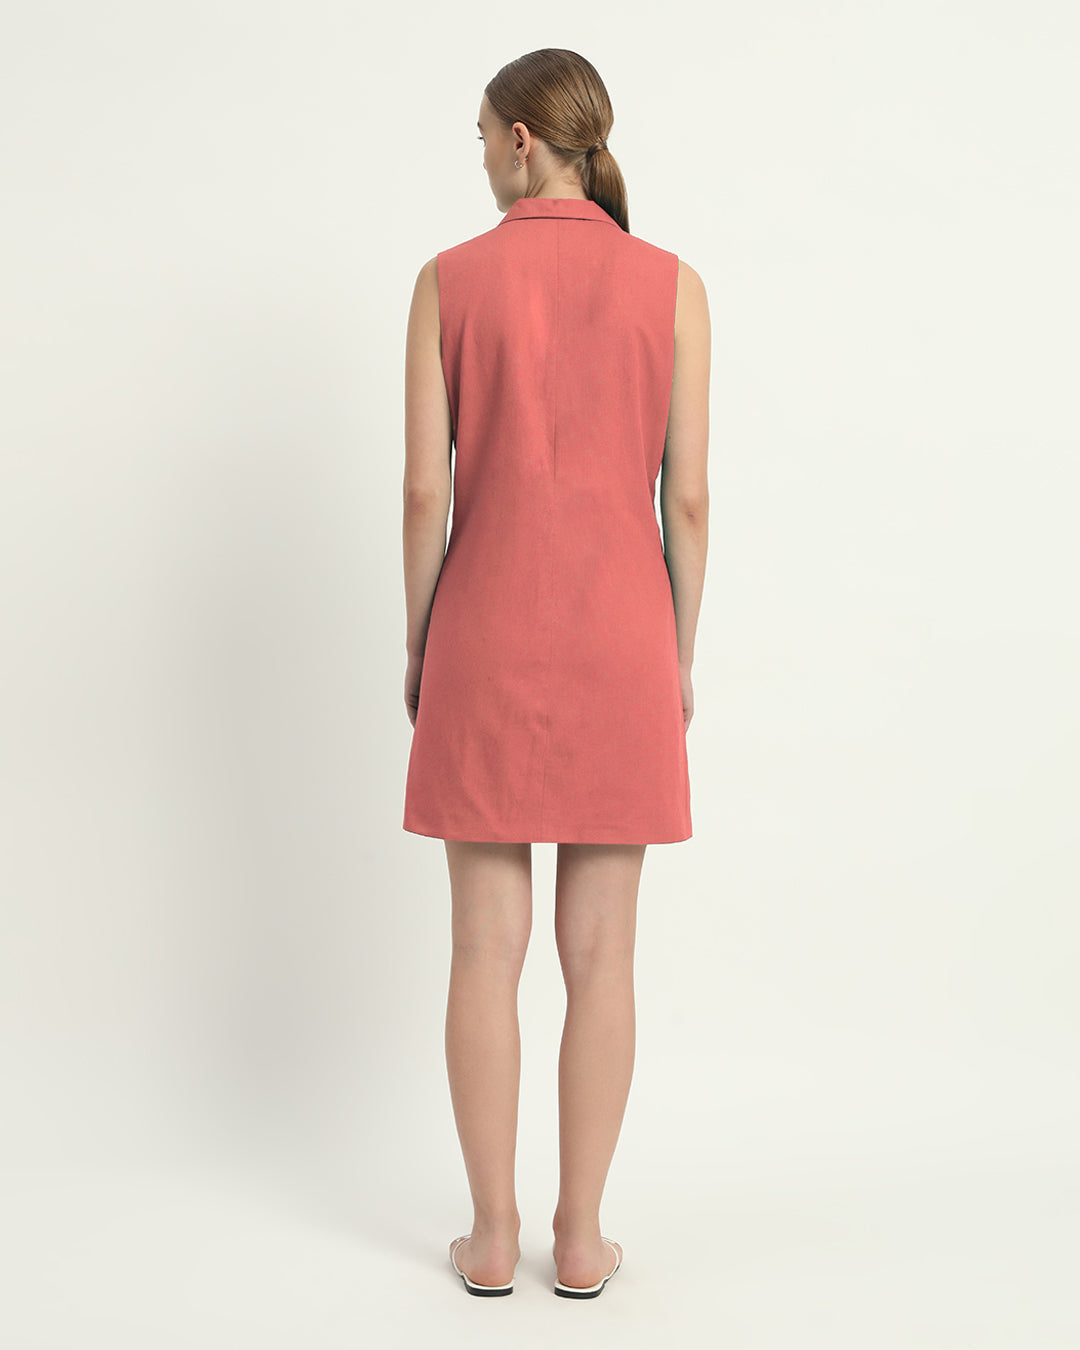 The Ivory Pink Vernon Cotton Dress